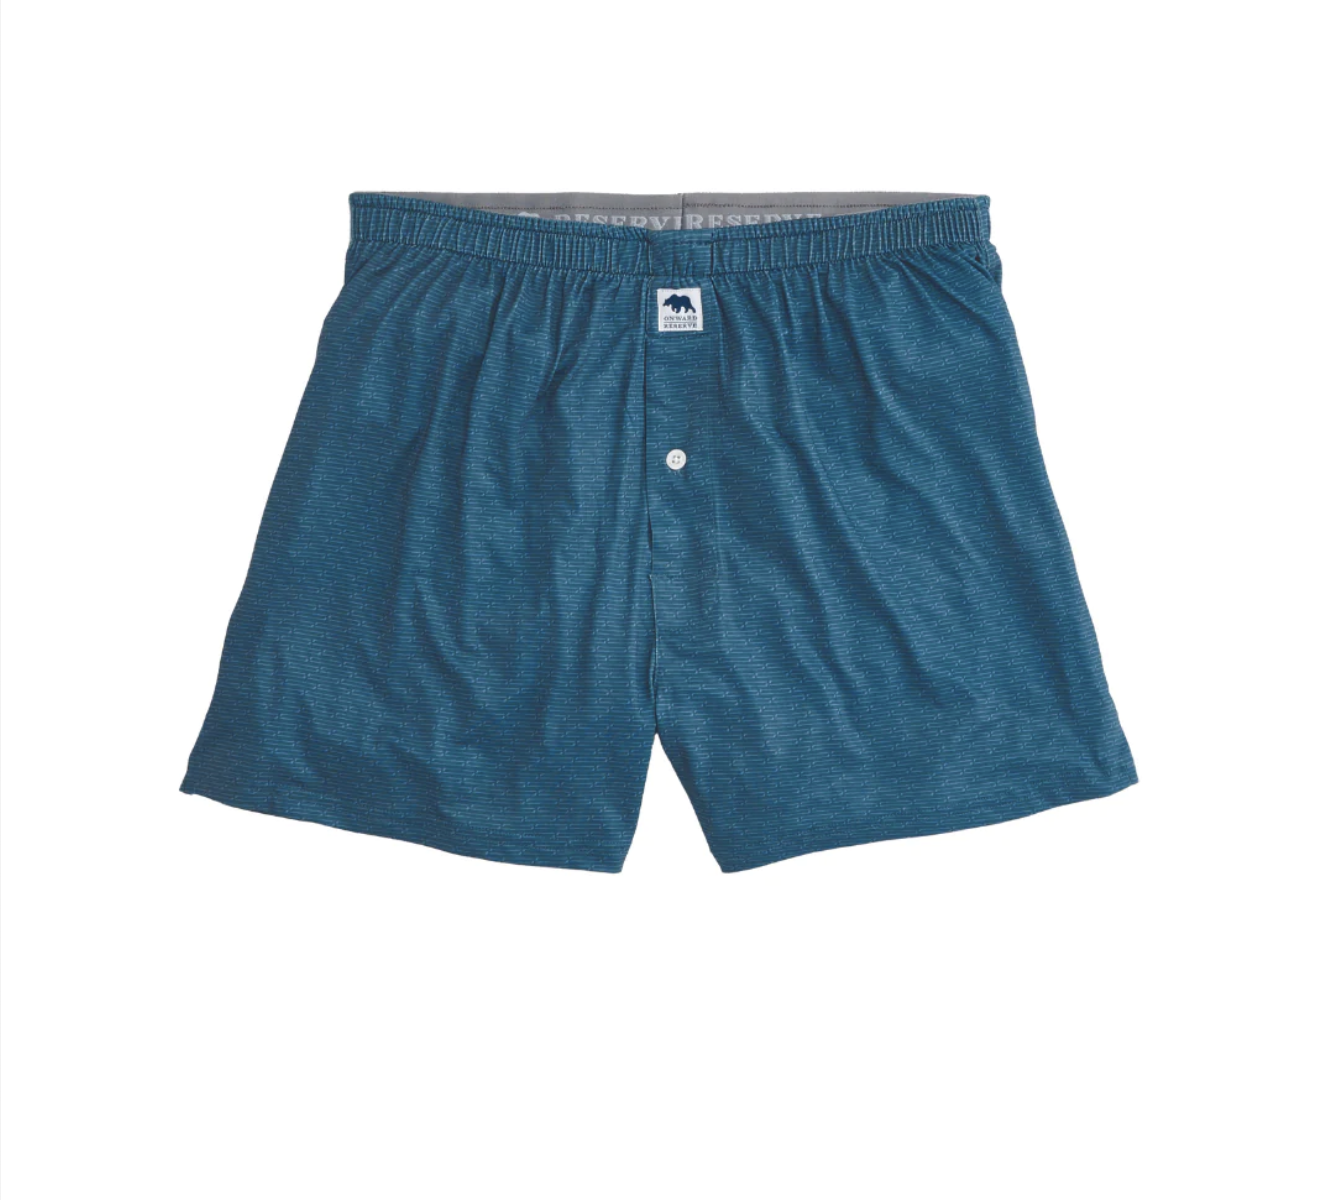 Onward Reserve Boxer Shorts - L